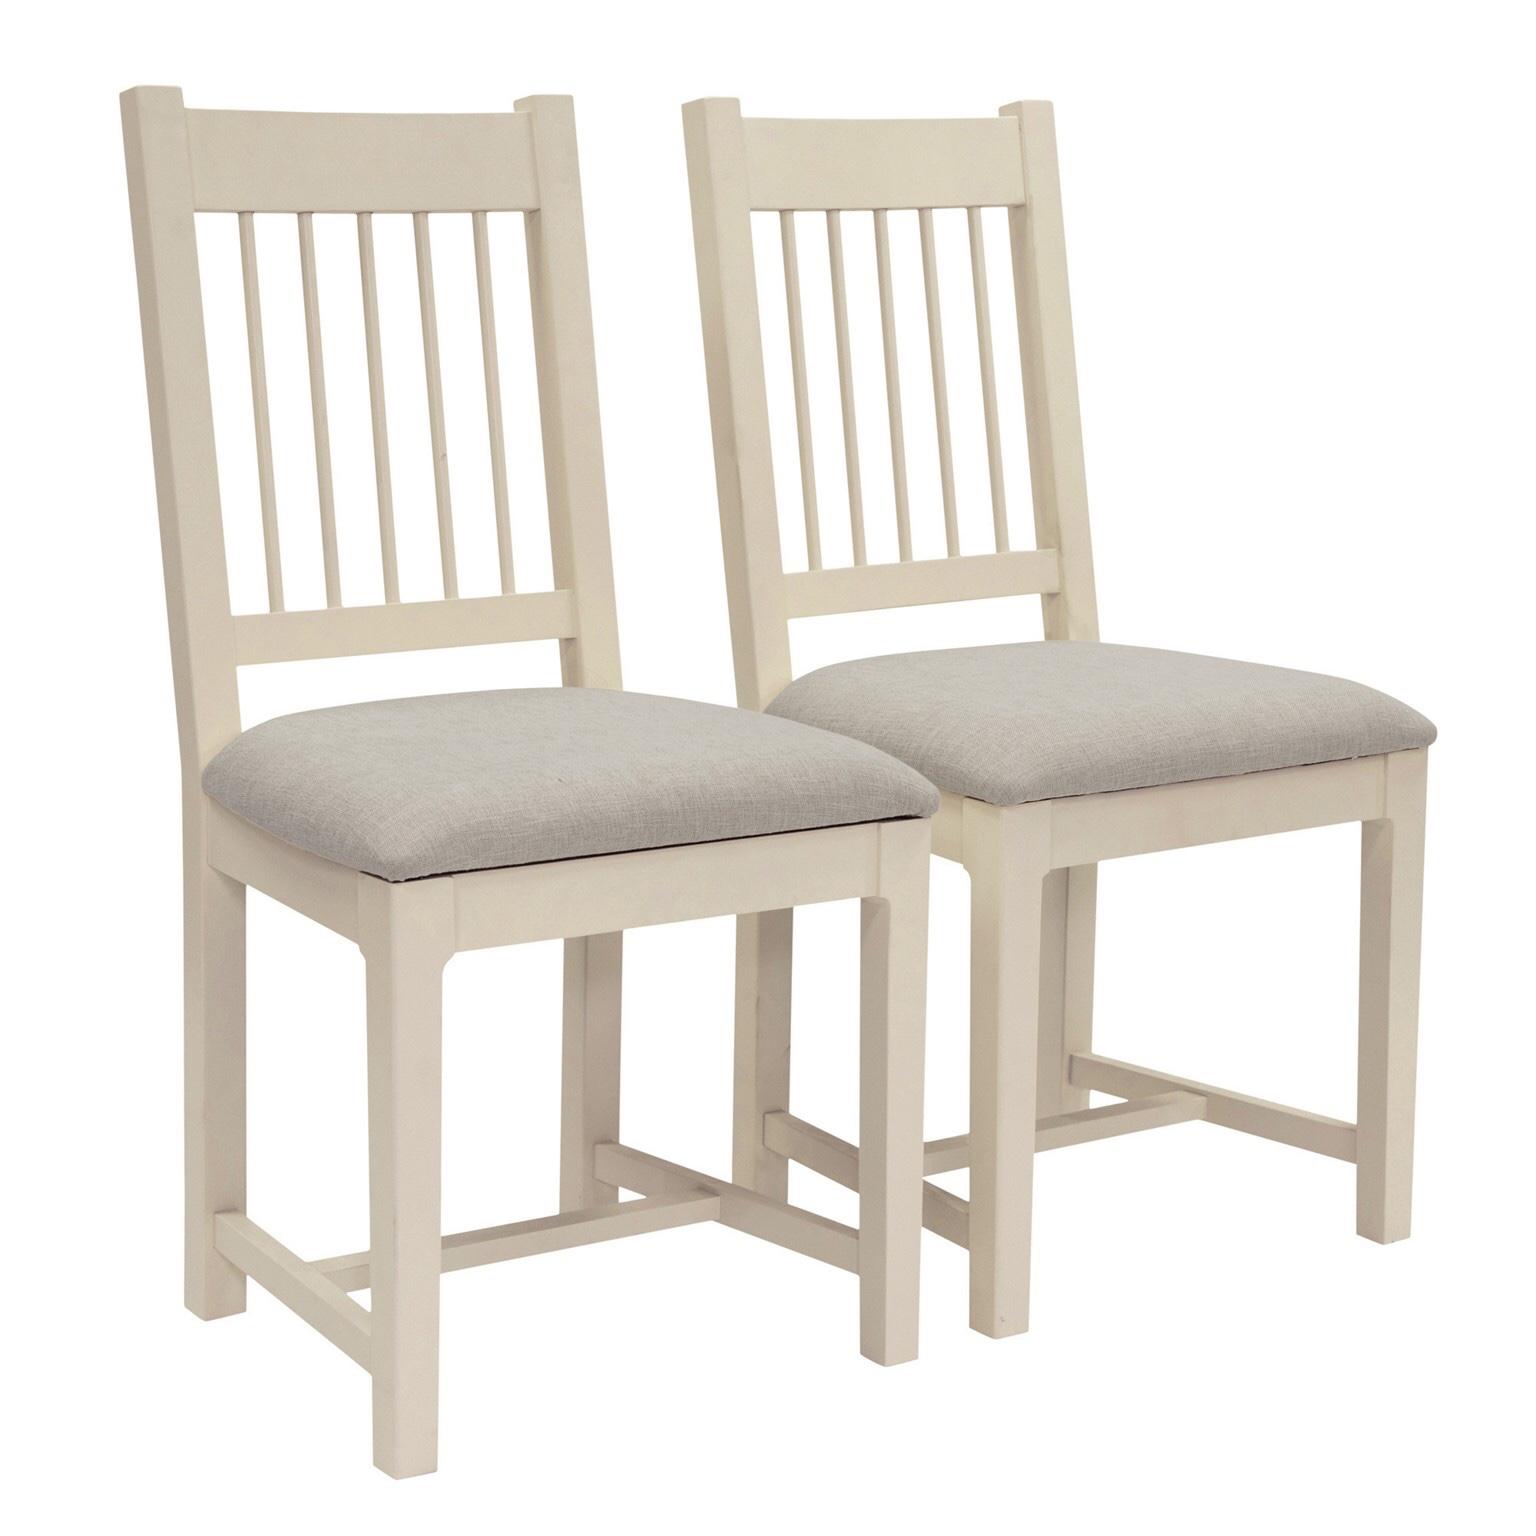 Willis Gambier Newquay Oak Top Table Chairs 4 In M35 Oldham Fur 300 00 Zum Verkauf Shpock De